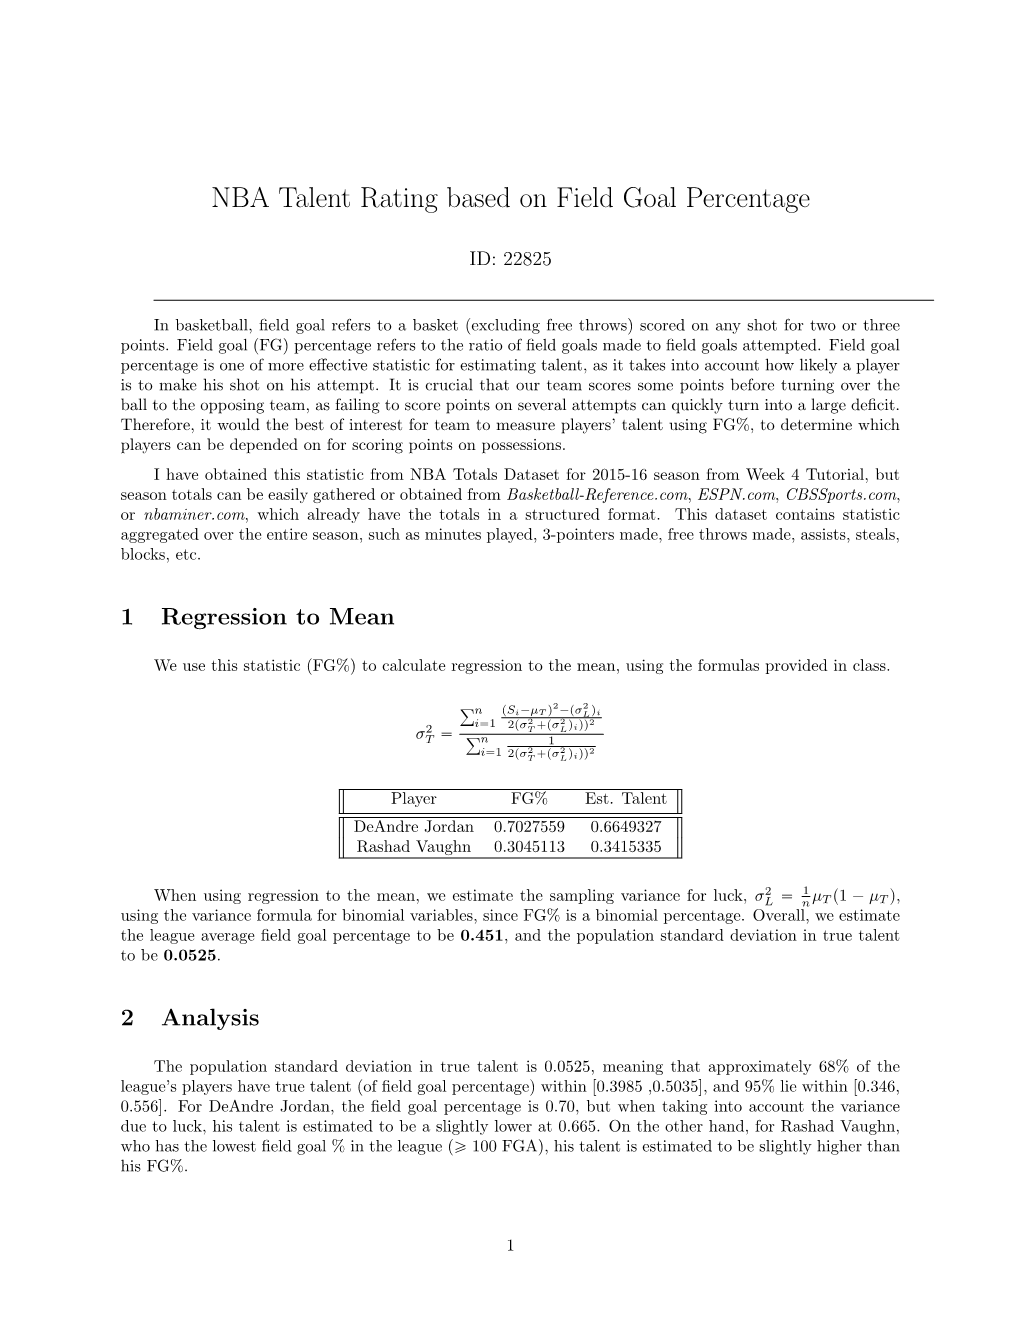 NBA Talent Rating Based on Field Goal Percentage